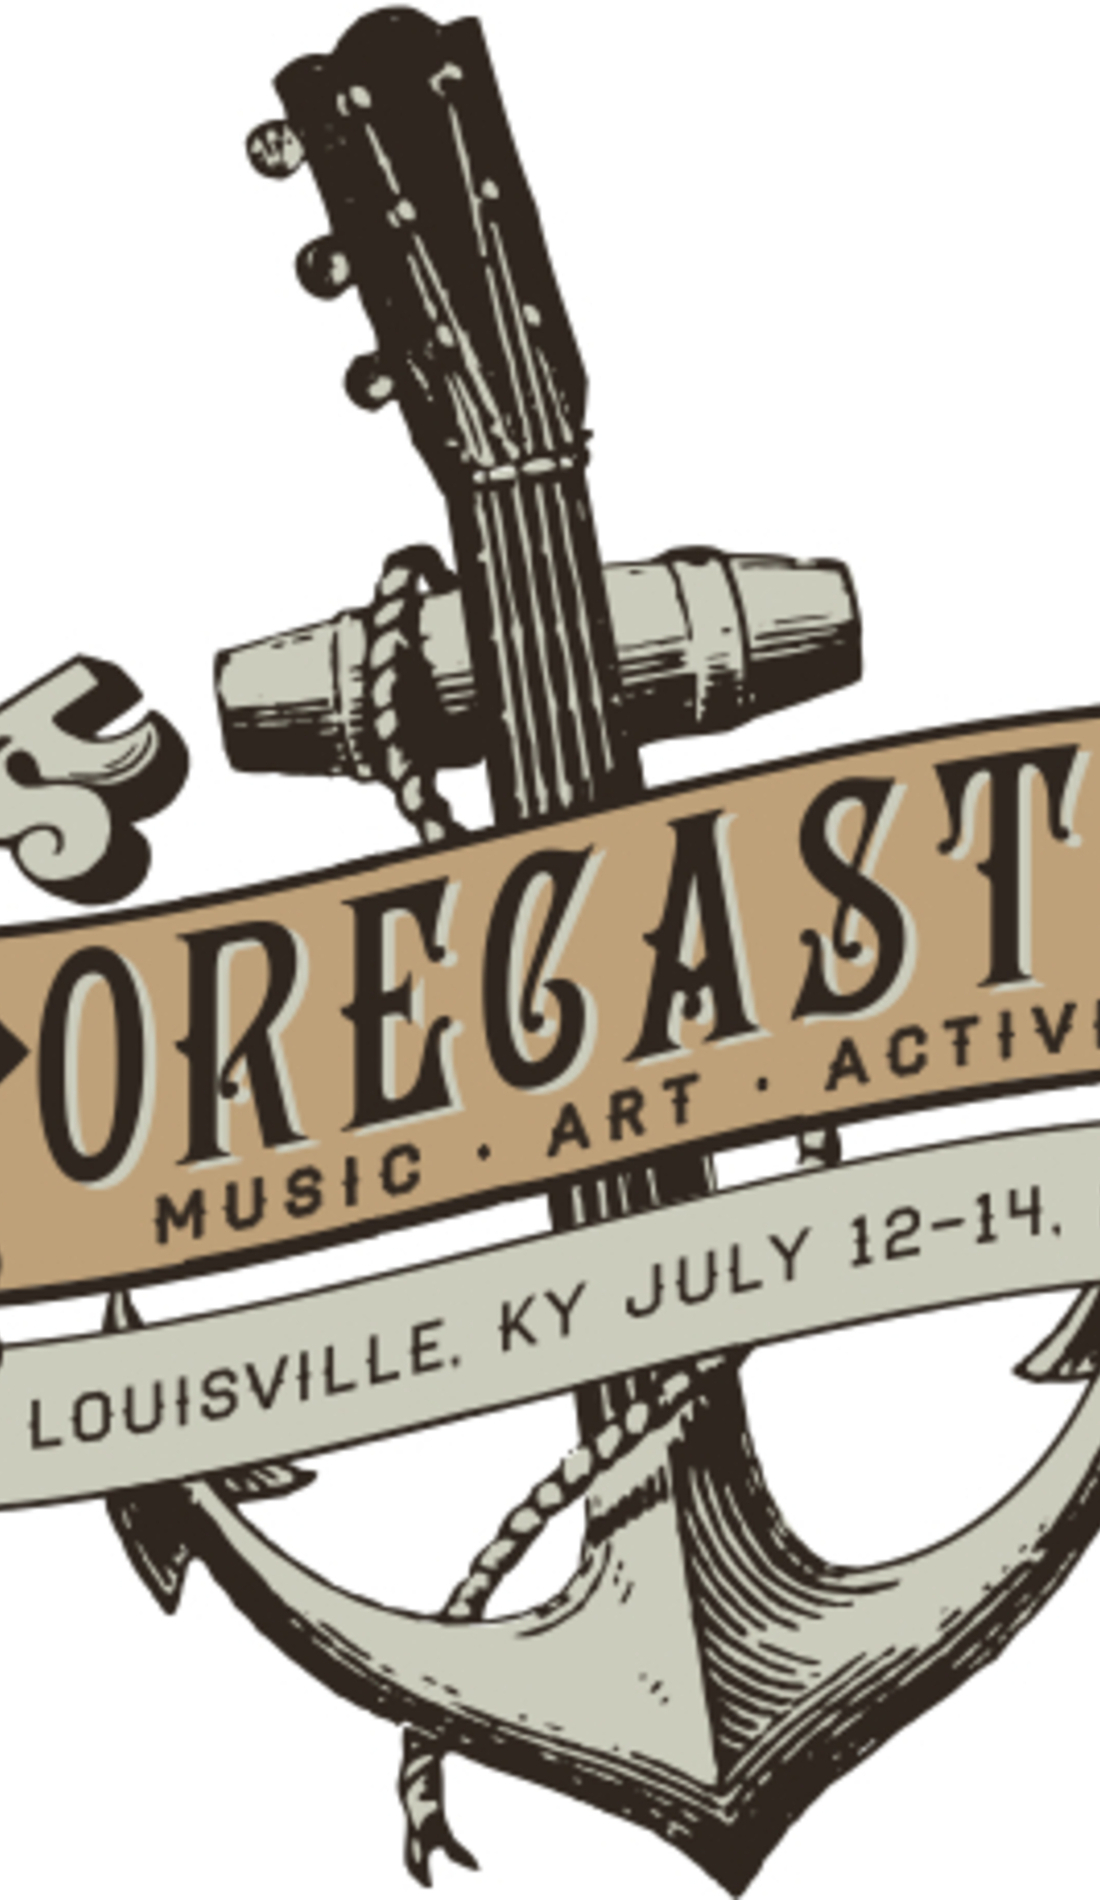 A Forecastle Festival live event